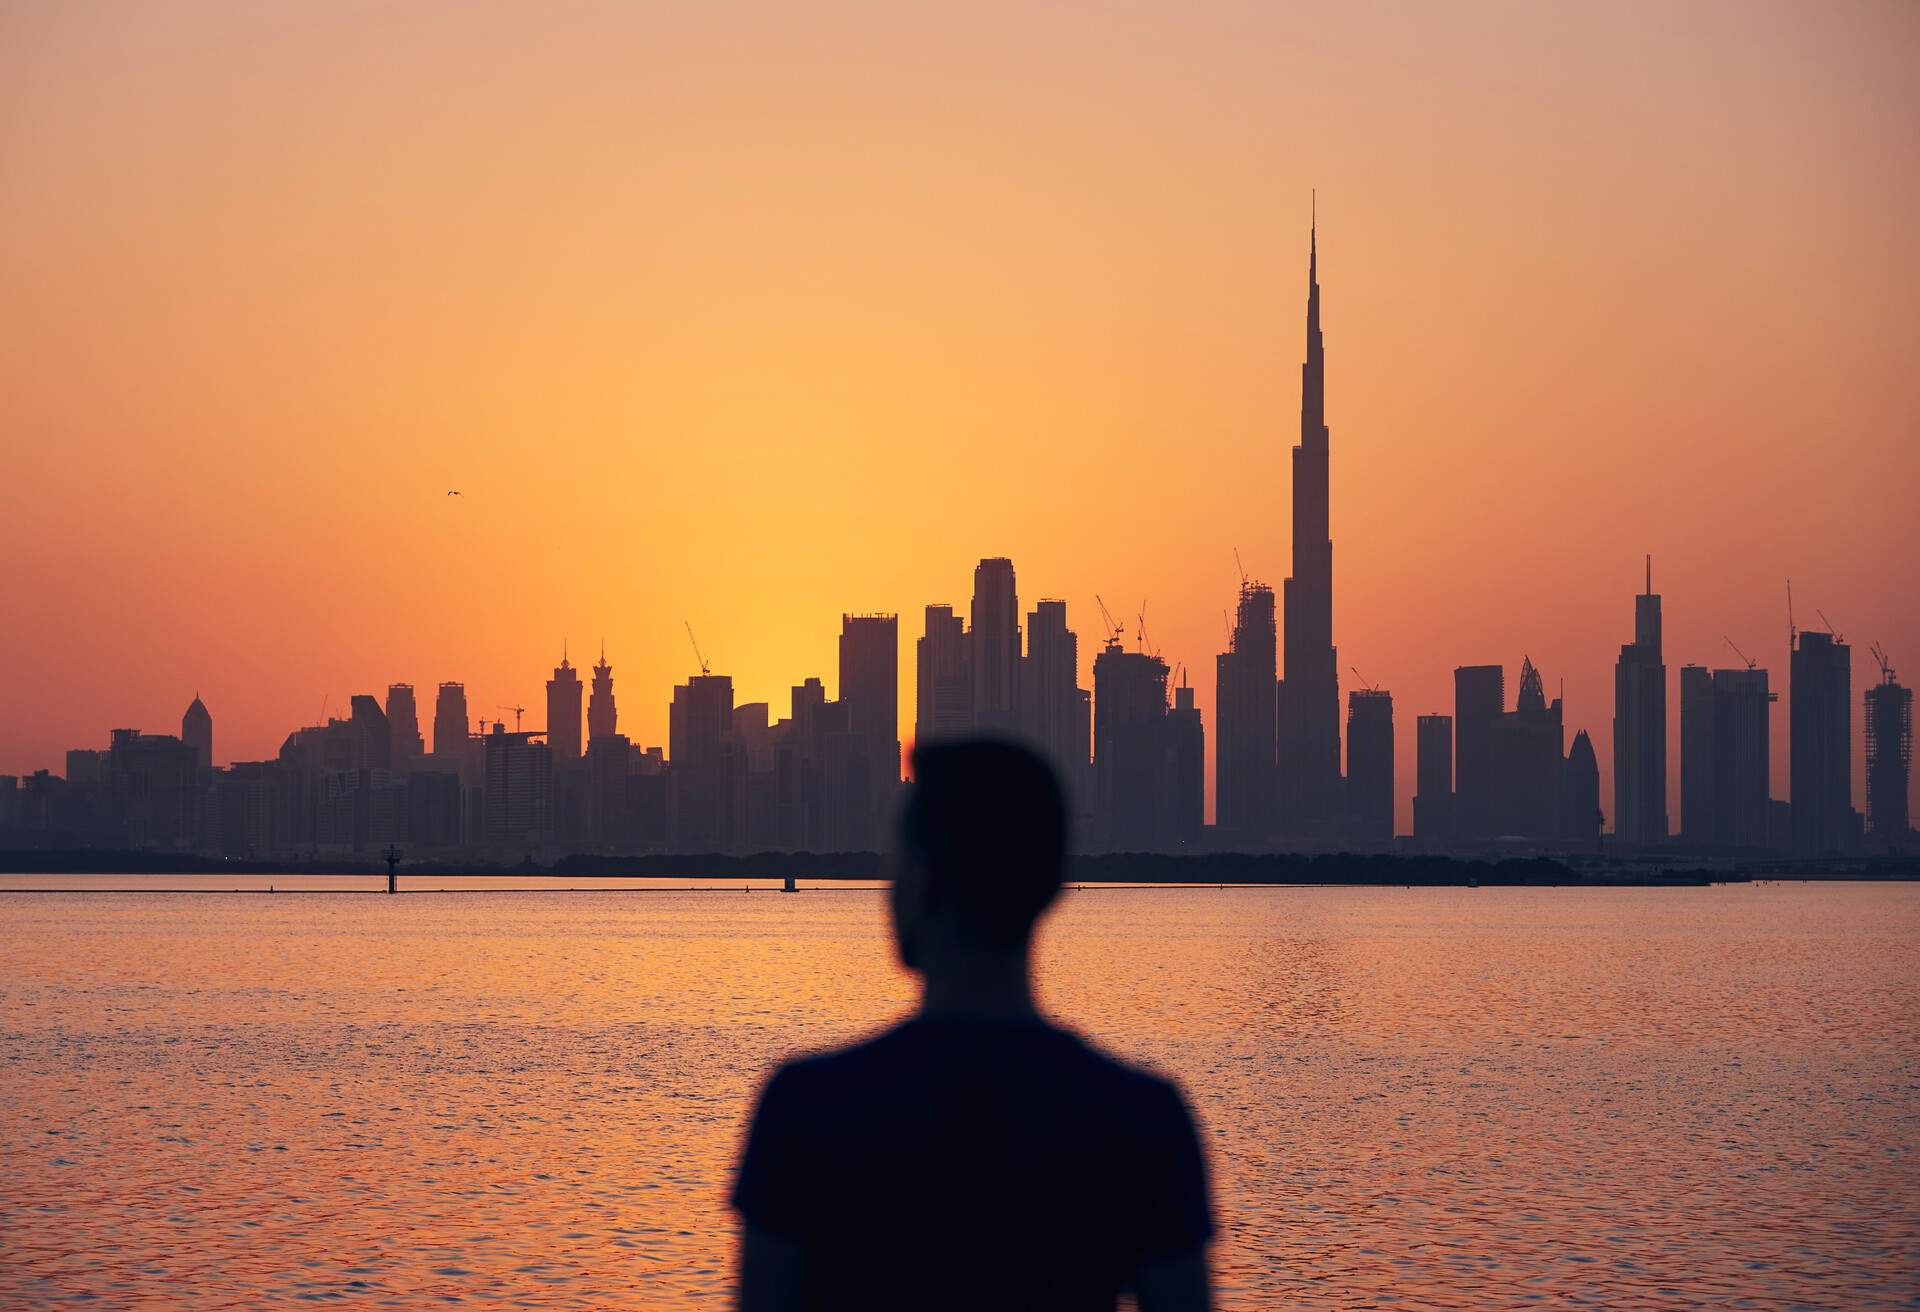 Silhouette of lonely man looking at cityscape at beautiful dusk. Urban skyline with tallest skyscraper Burj Khalifa, Dubai, United Arab Emirates.